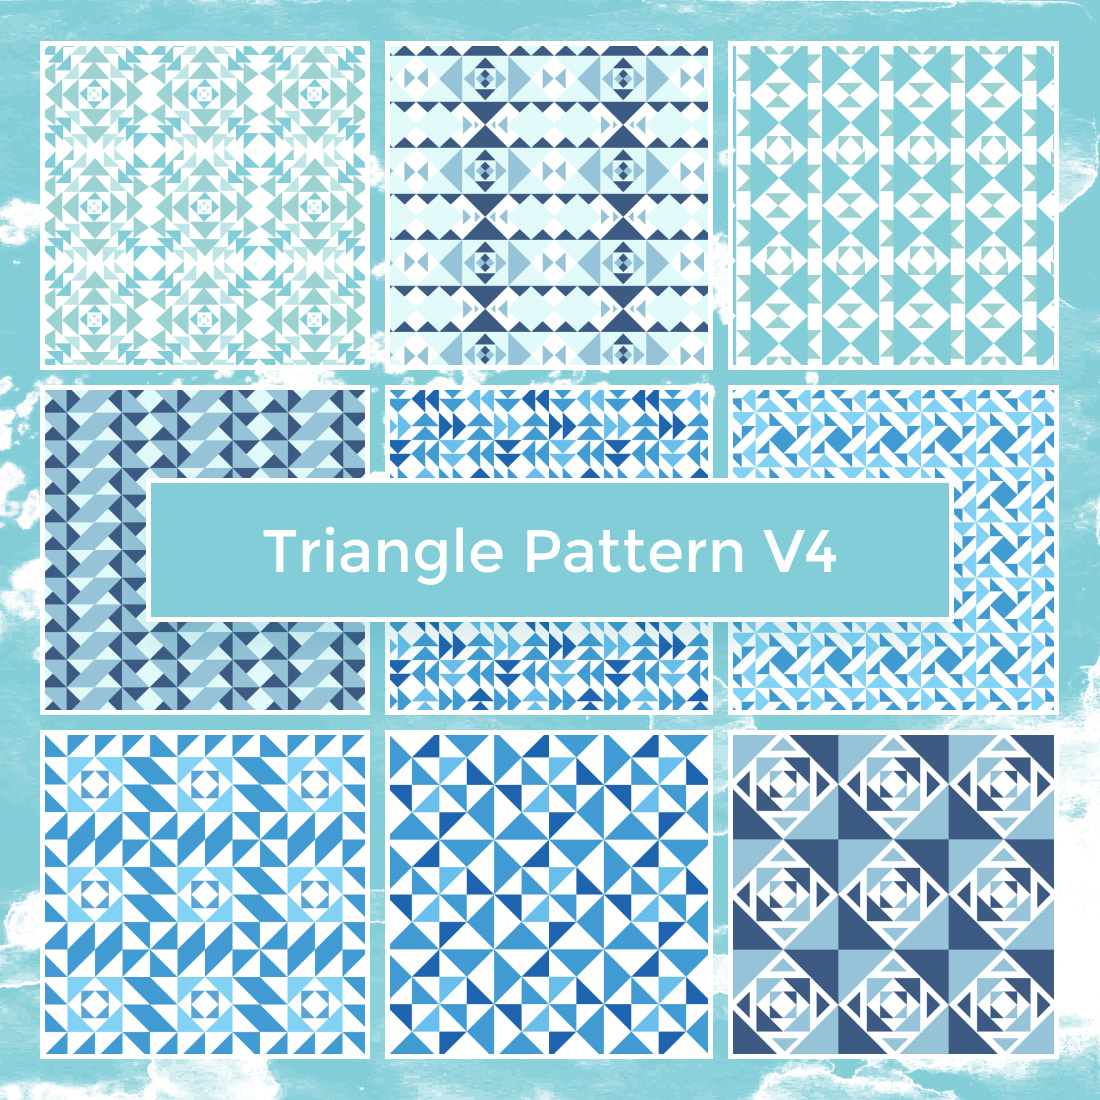 Triangle Pattern V4.